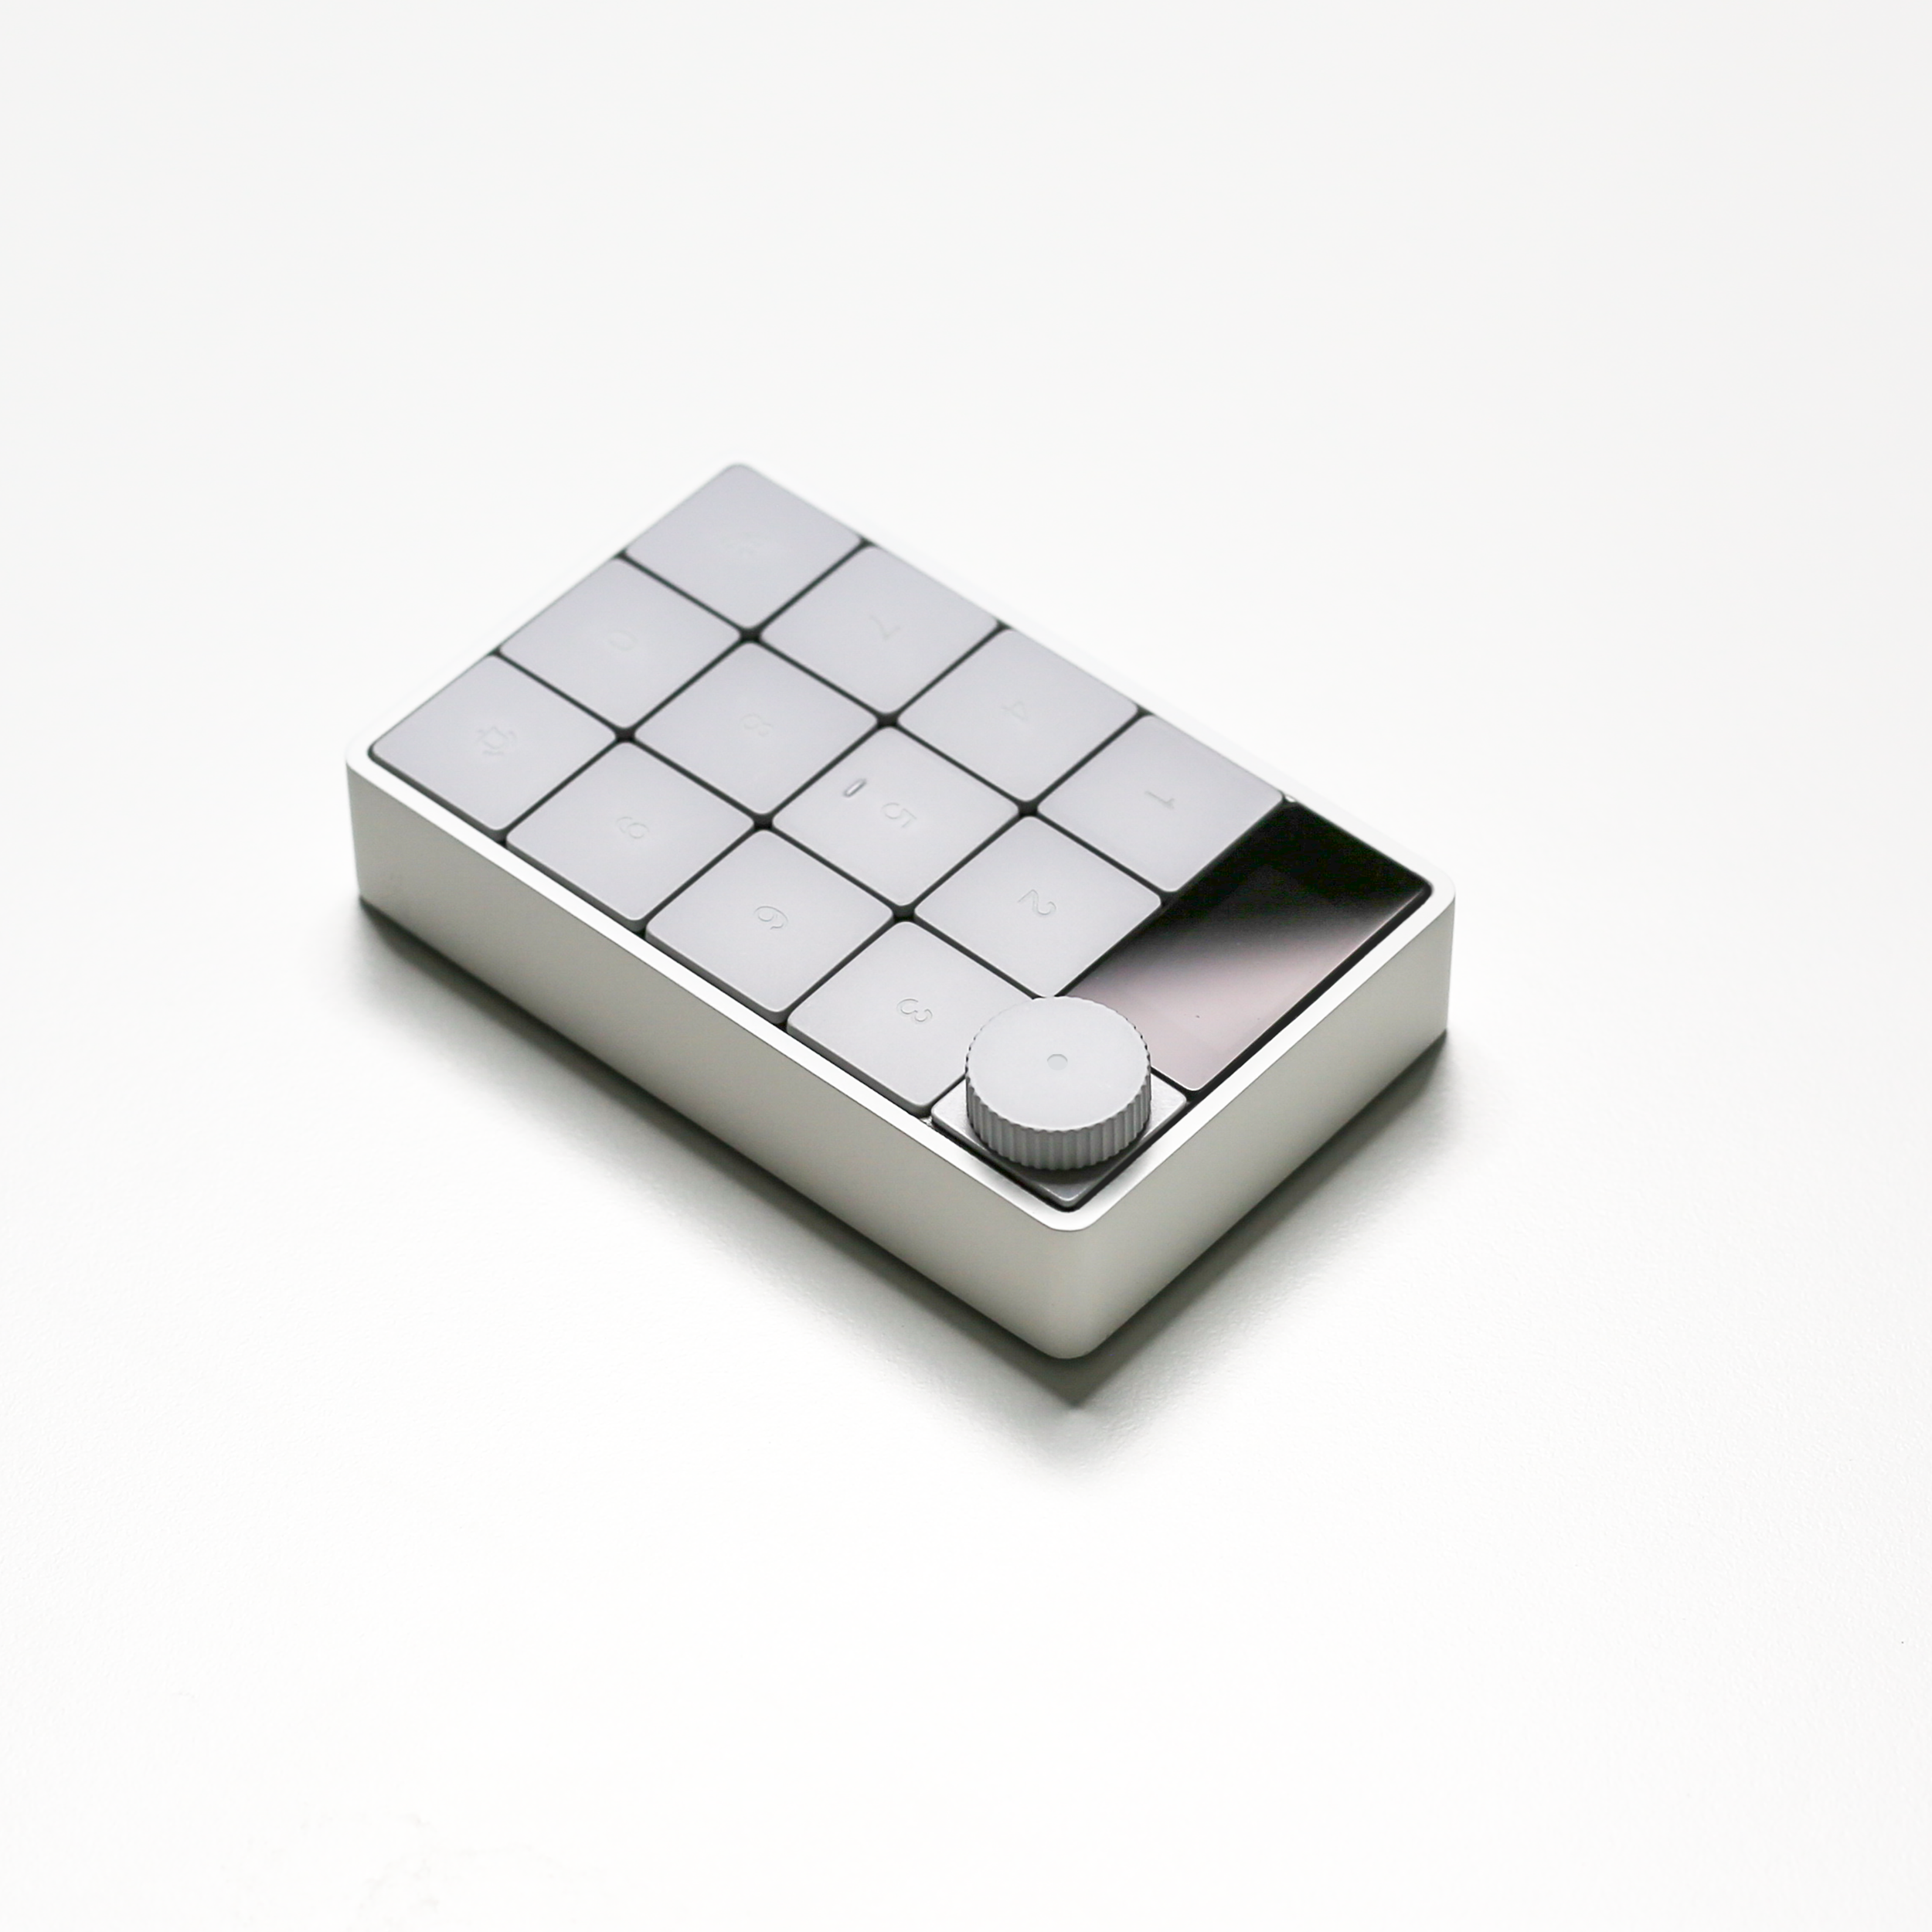 keypad hero knob (square)@2x.png